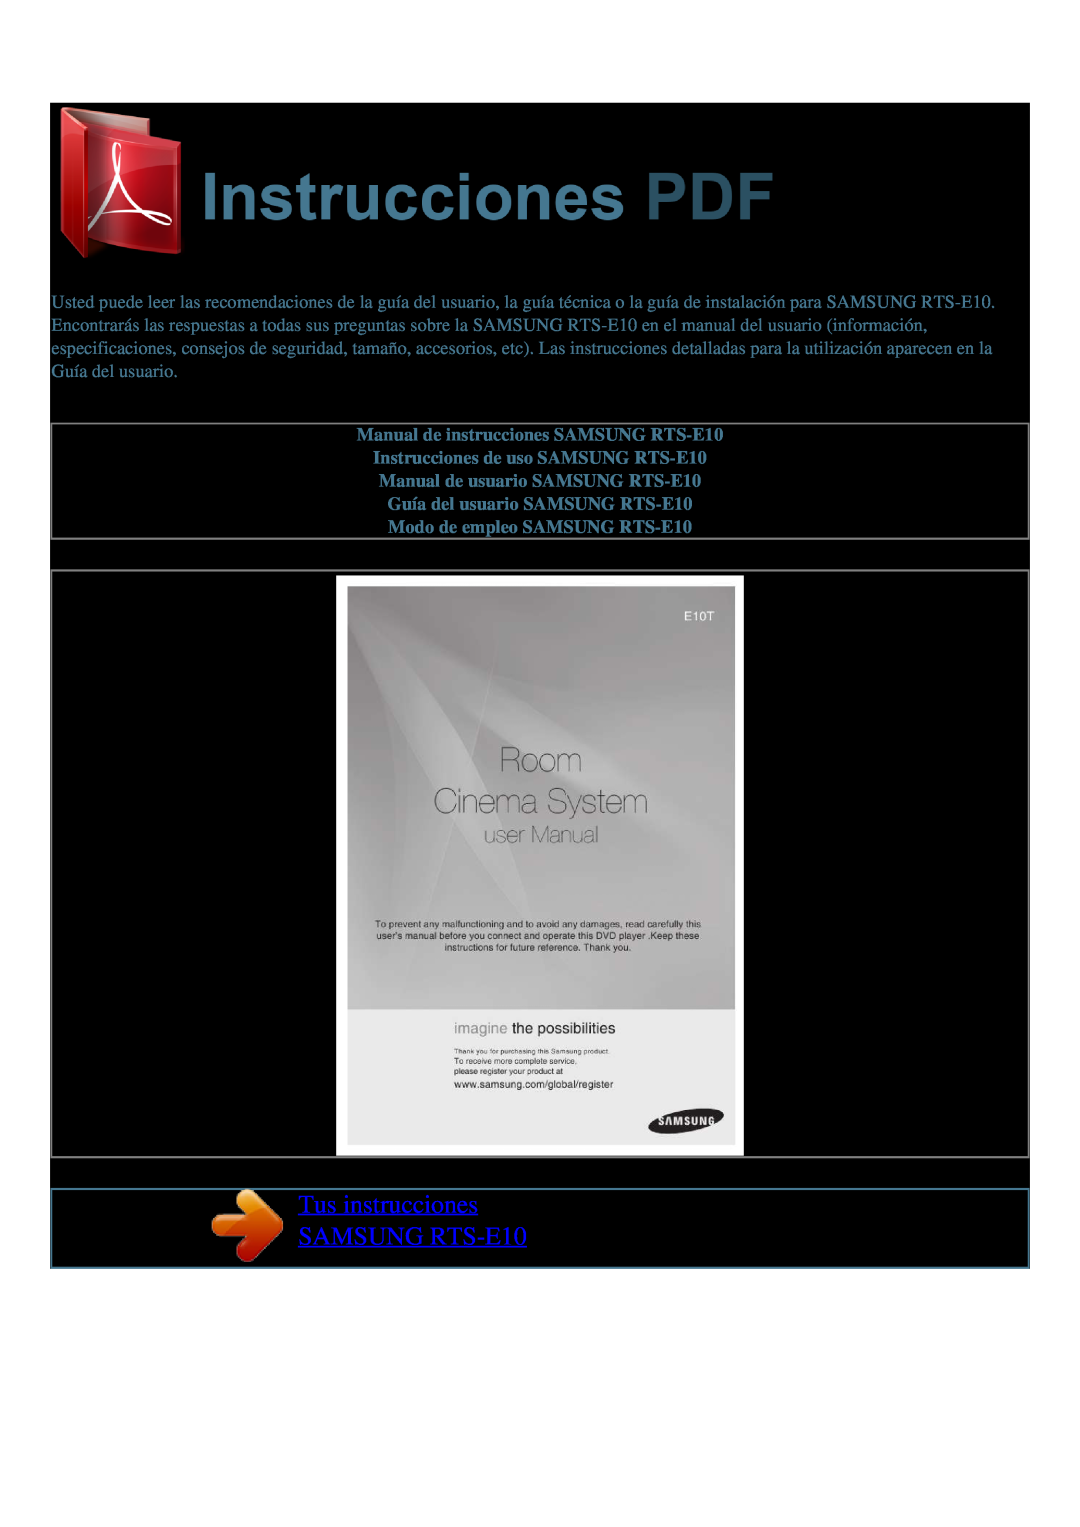 Samsung manual Tus instrucciones SAMSUNG RTS-E10, Manual de instrucciones SAMSUNG RTS-E10 